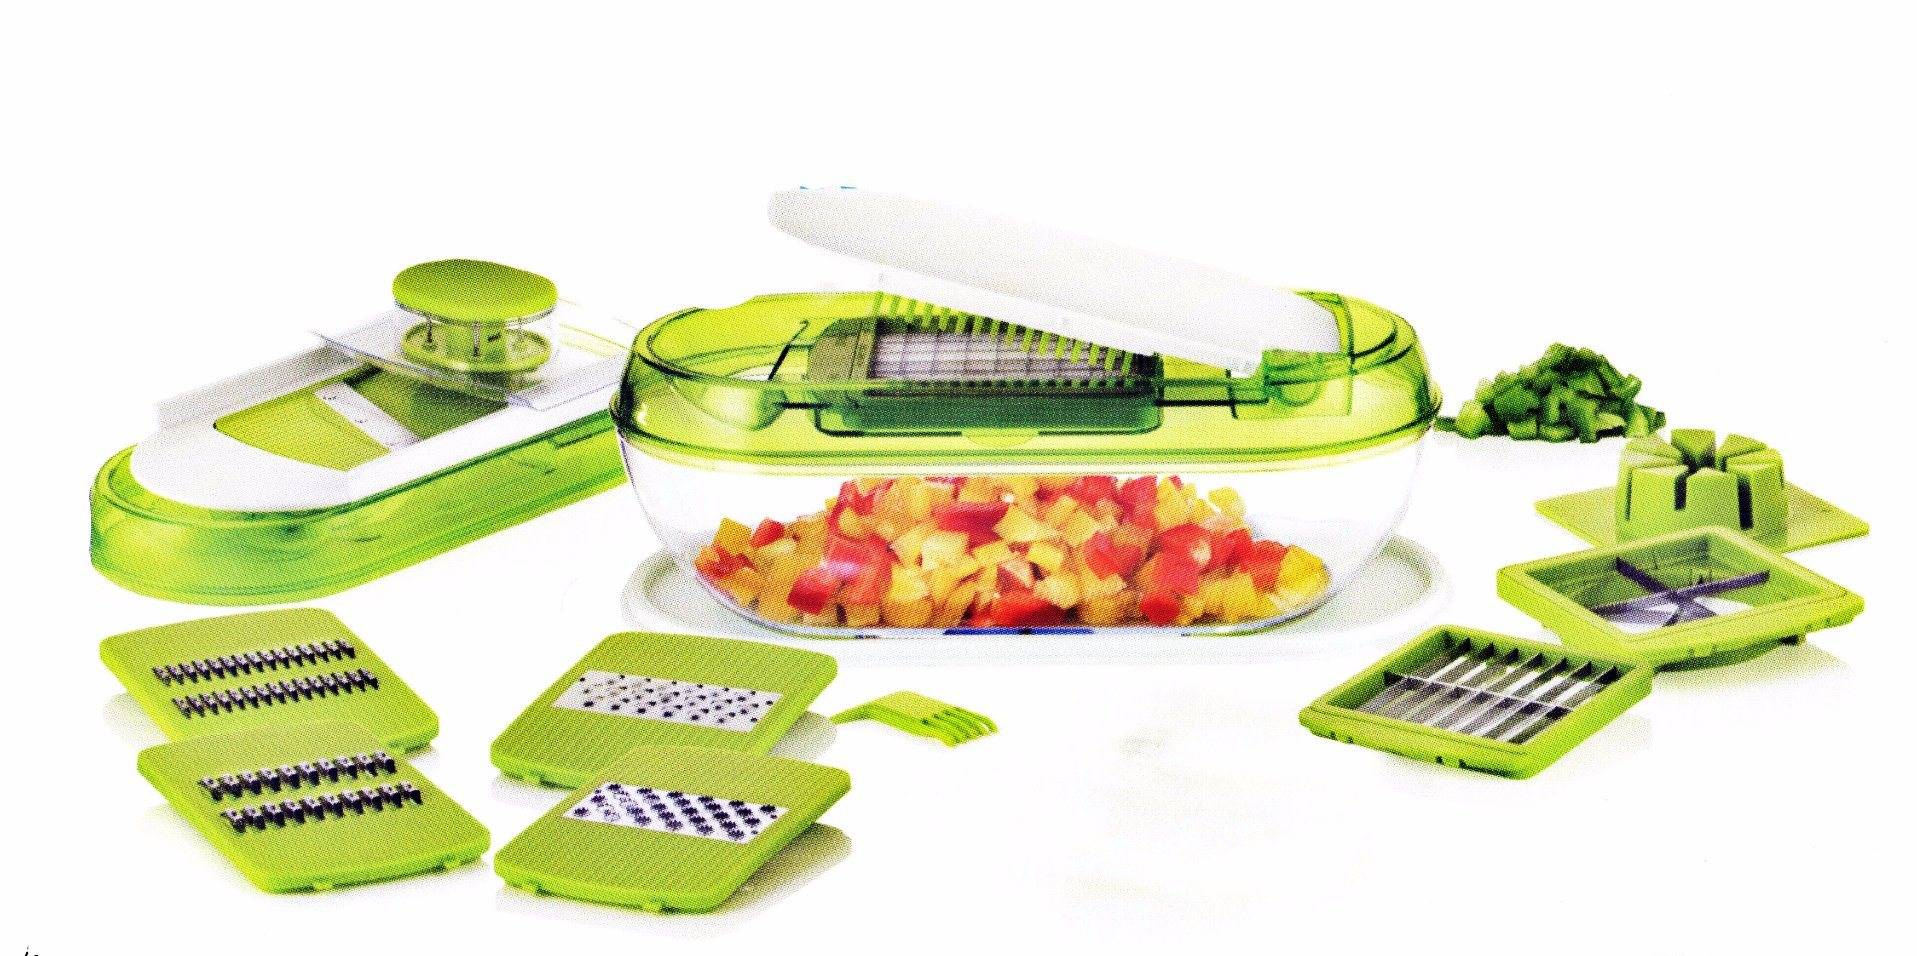 8 in 1 Plastic Food Processor Vegetable Chopper Cutting Machine Set Cg054